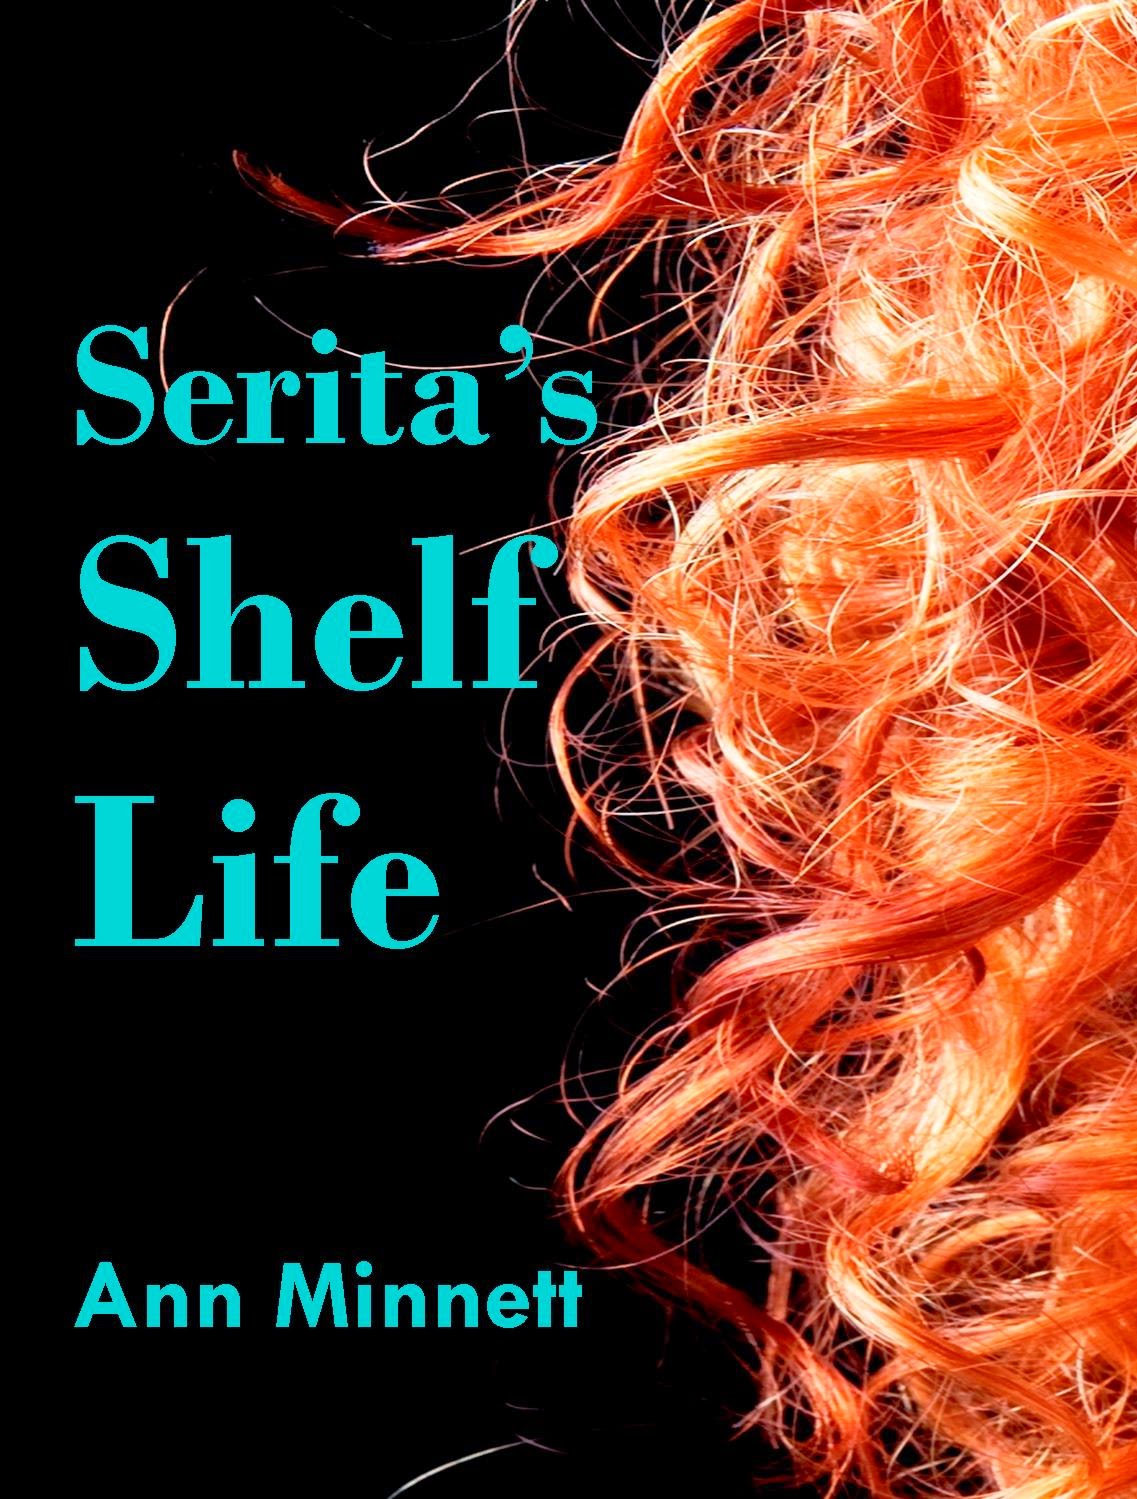 Serita's Shelf Life